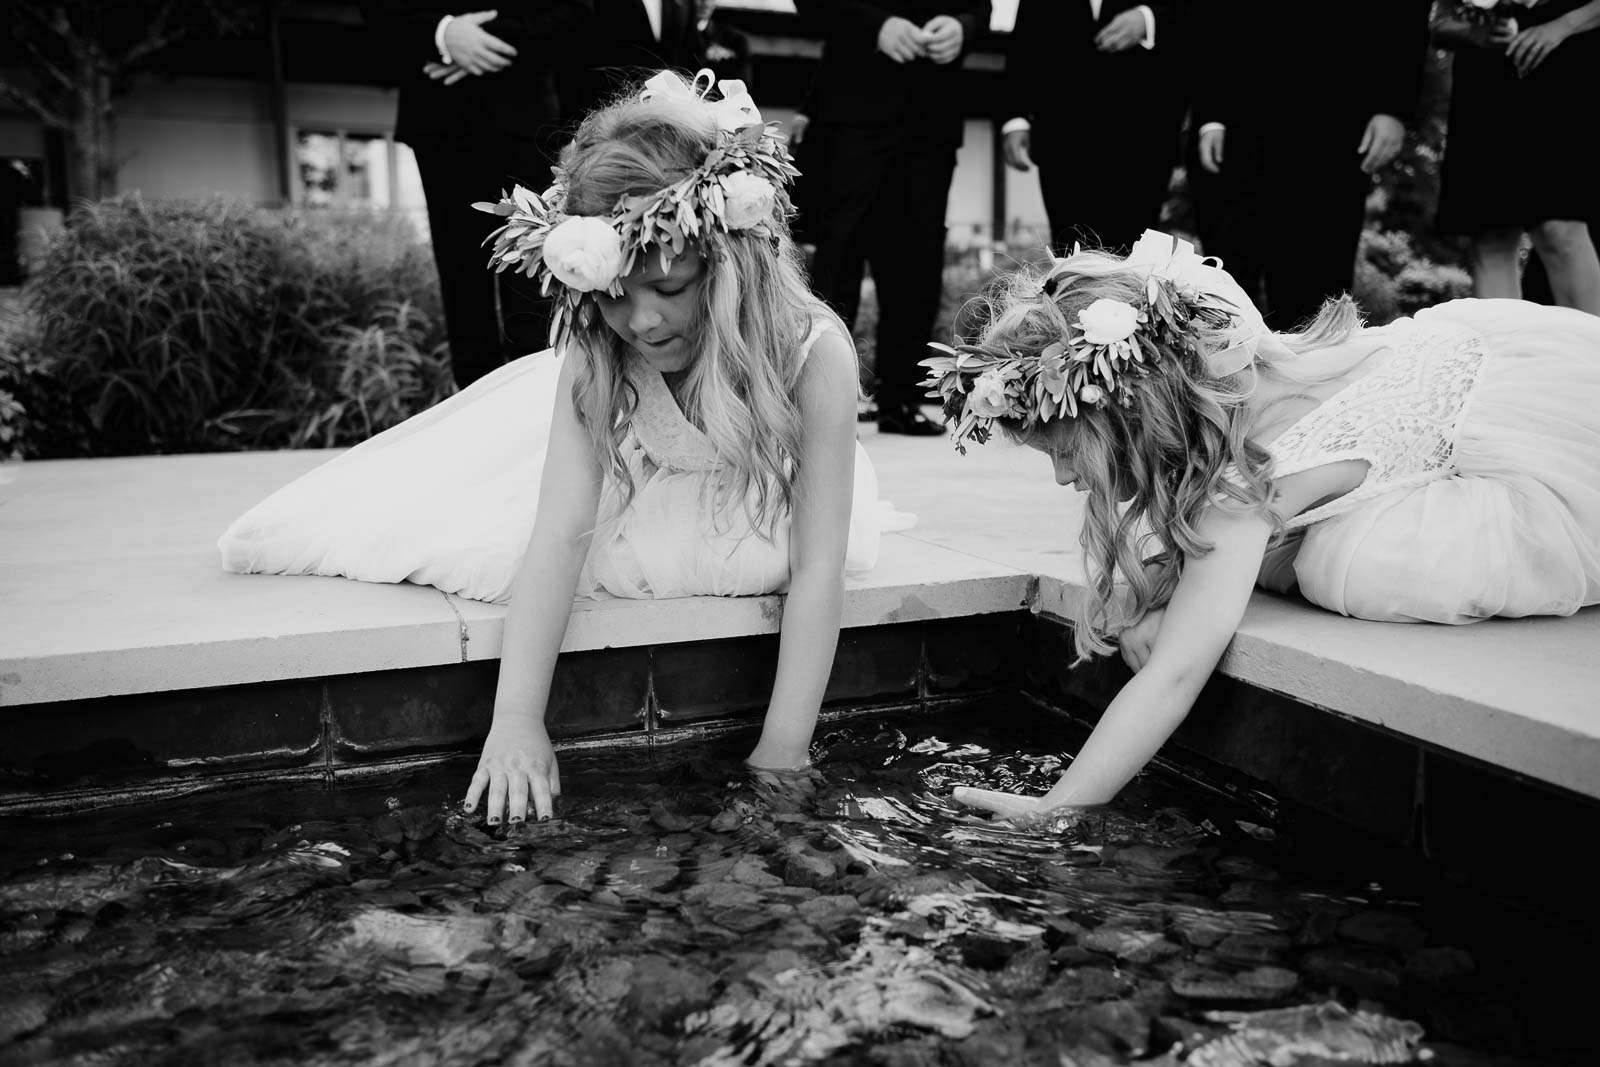 la Cantera Resort Wedding San Antonio Texas Summer 2021 - Leica Photography-Sarah-Scott-Philip Thomas Photography